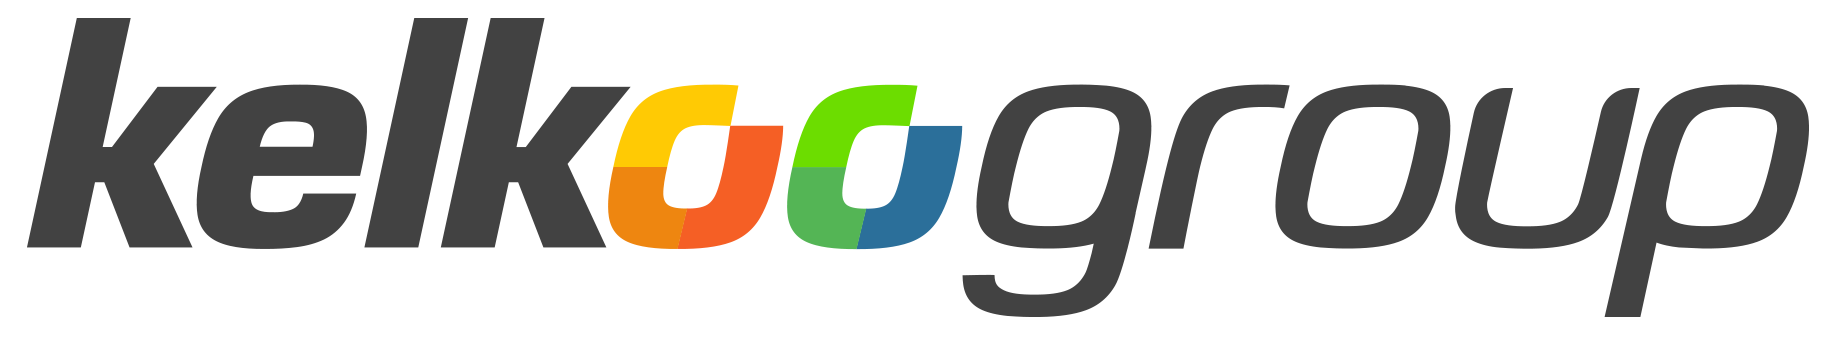 kg_logo_JuBDDA8.png